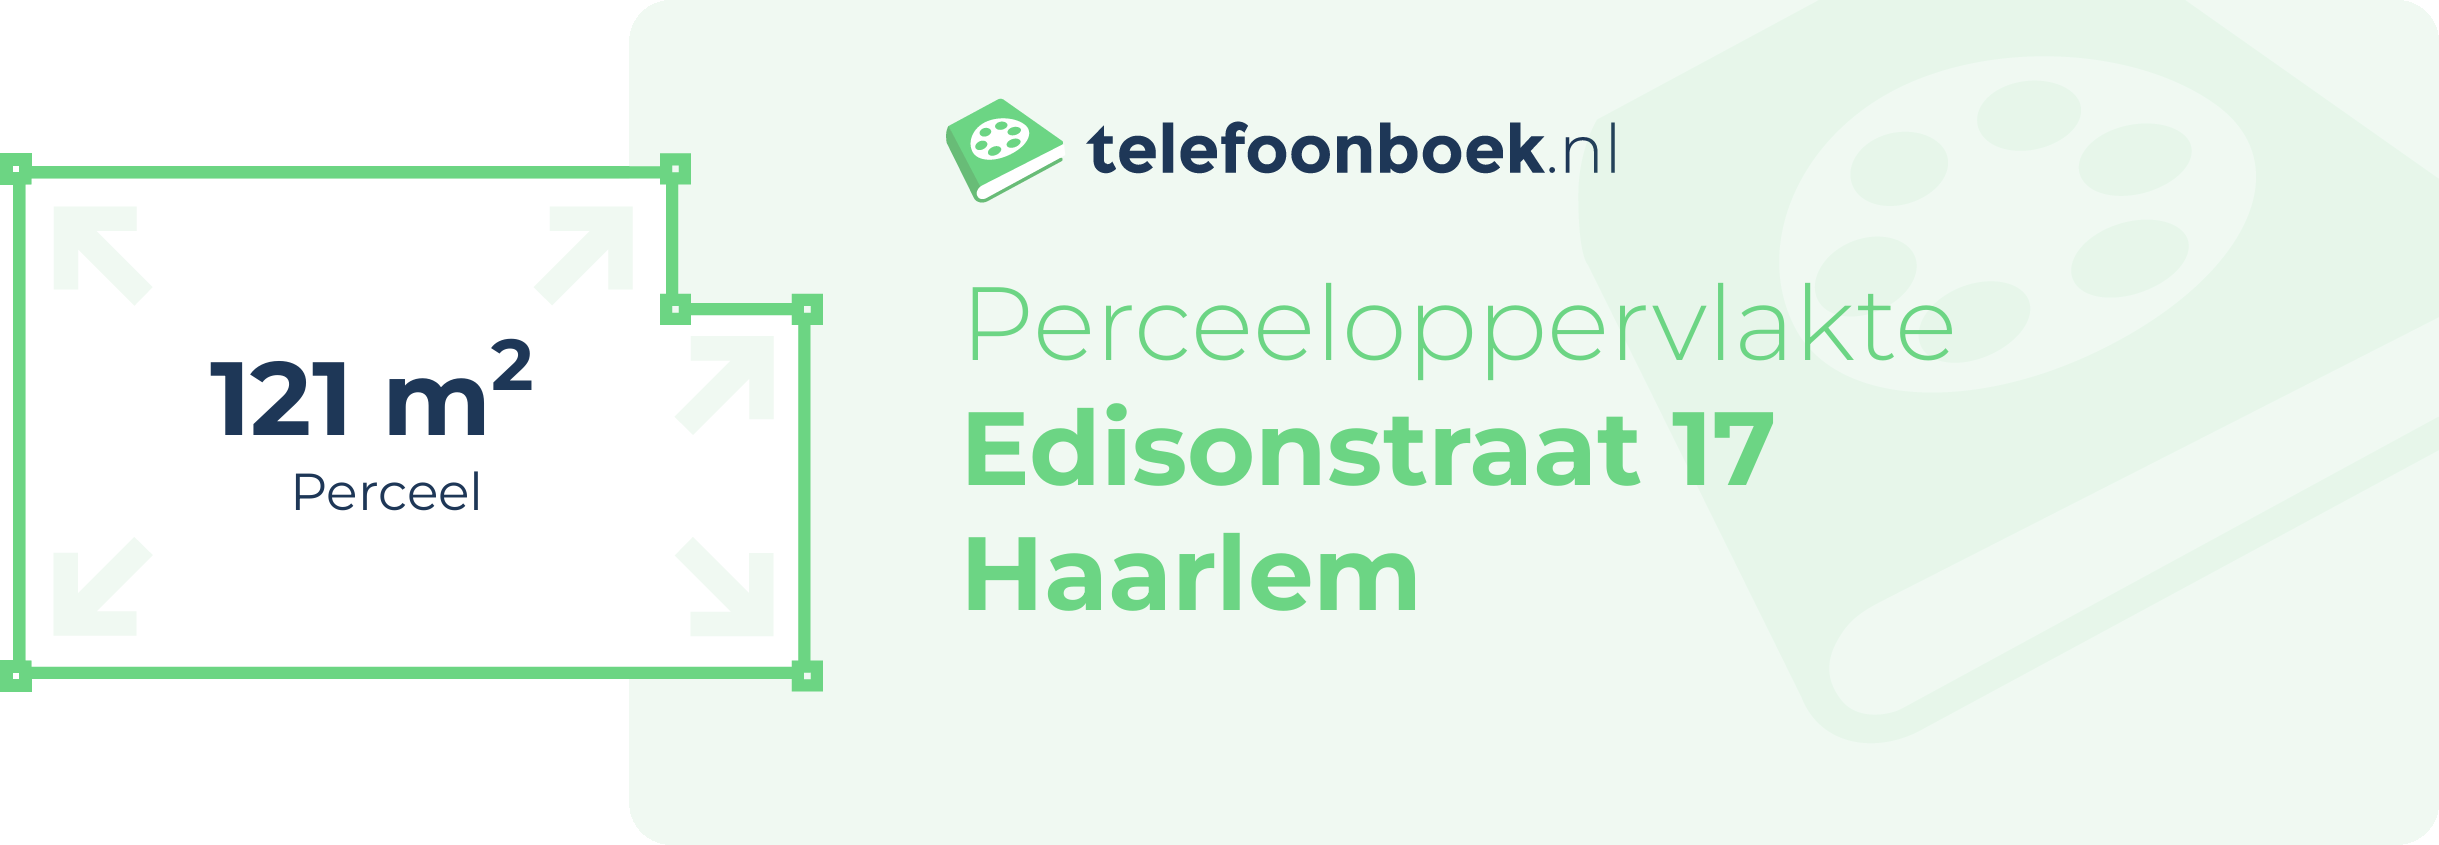 Perceeloppervlakte Edisonstraat 17 Haarlem